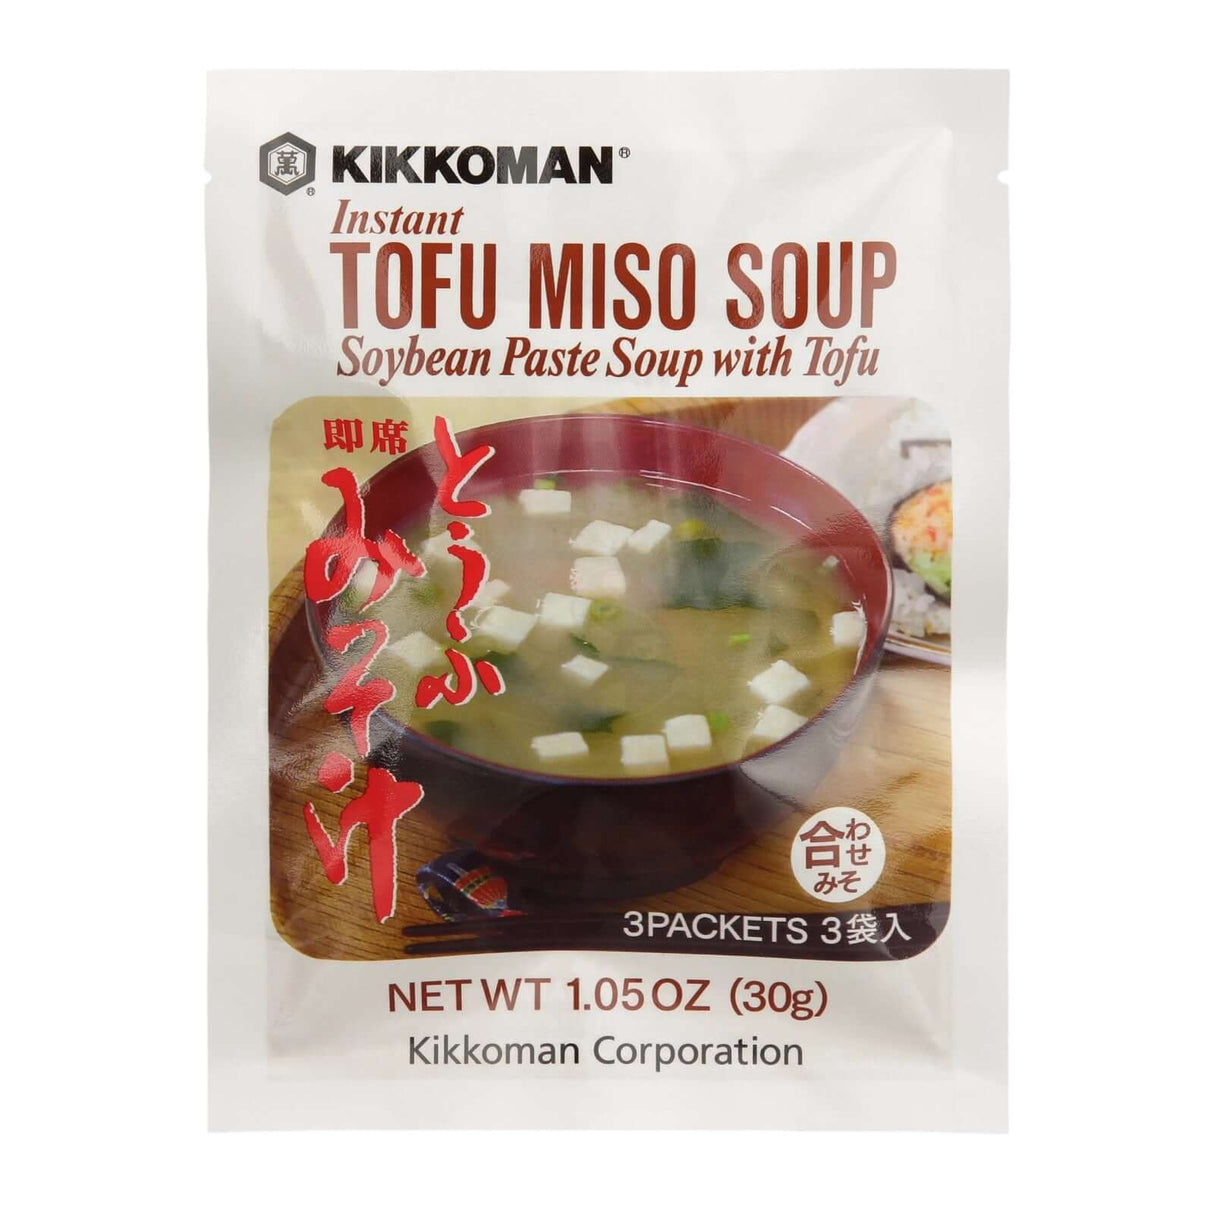 Kikkoman Instant Tofu Miso Soup